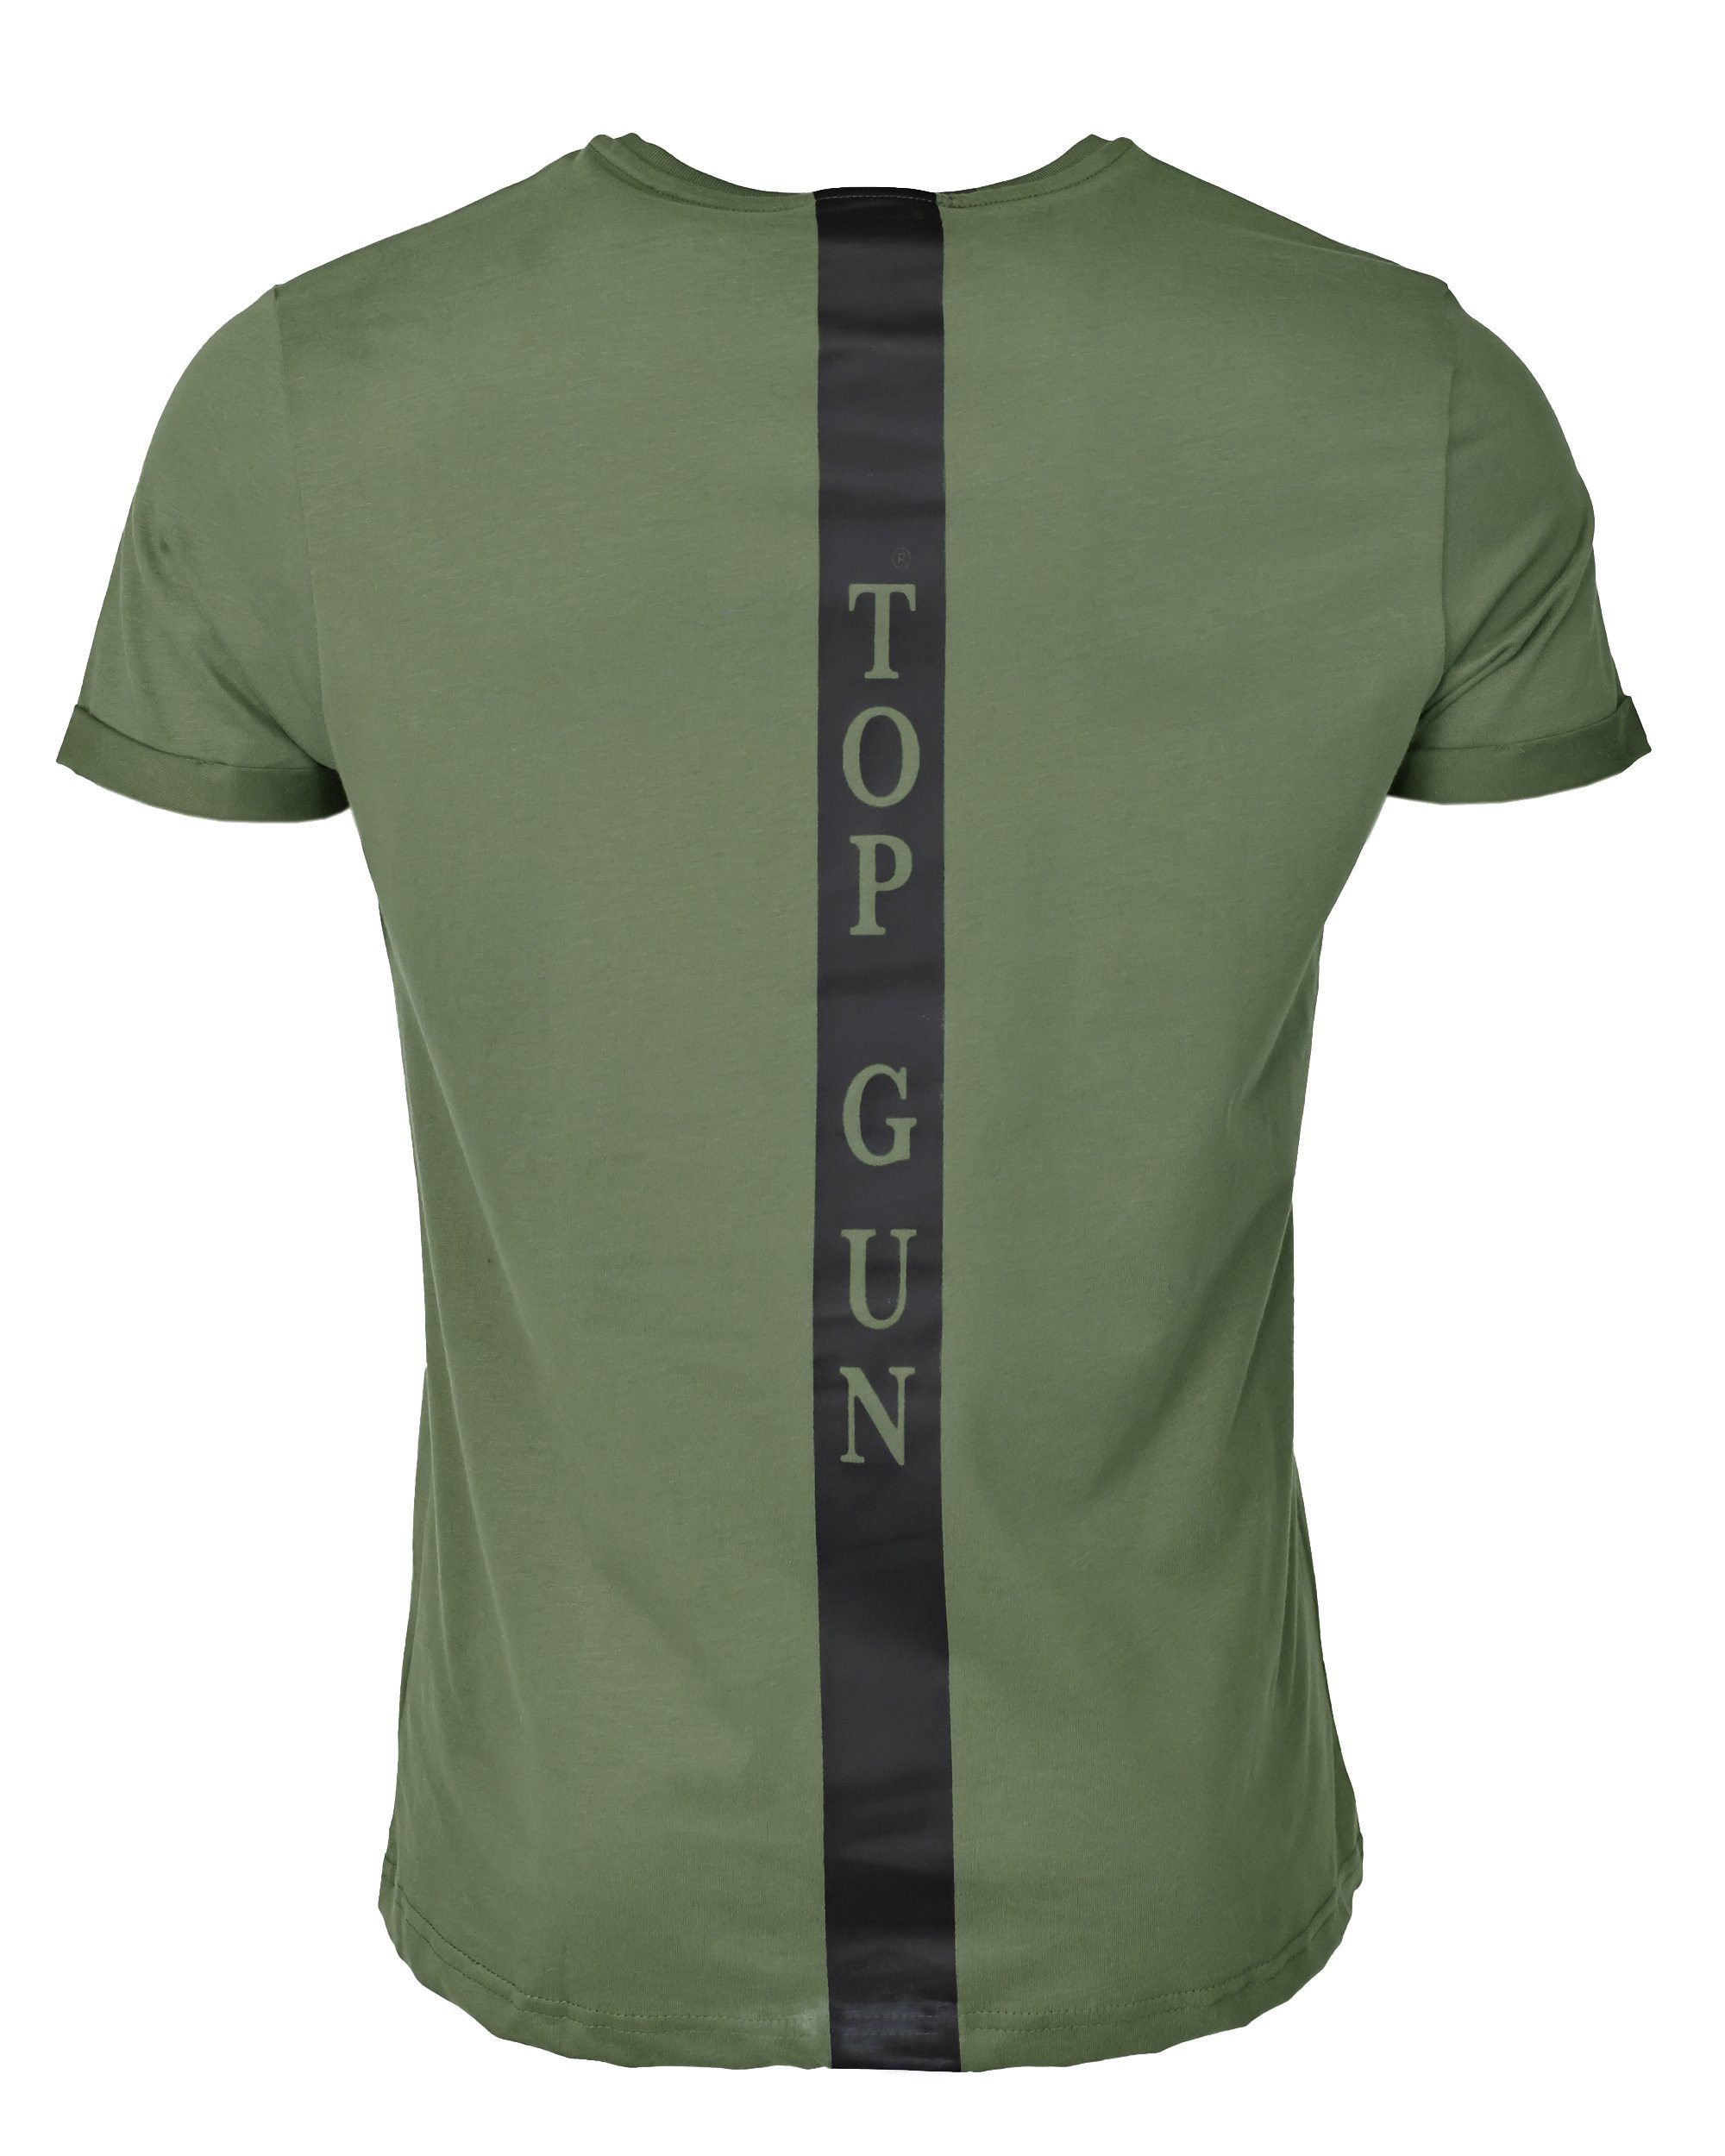 olive TG20213011 TOP T-Shirt GUN